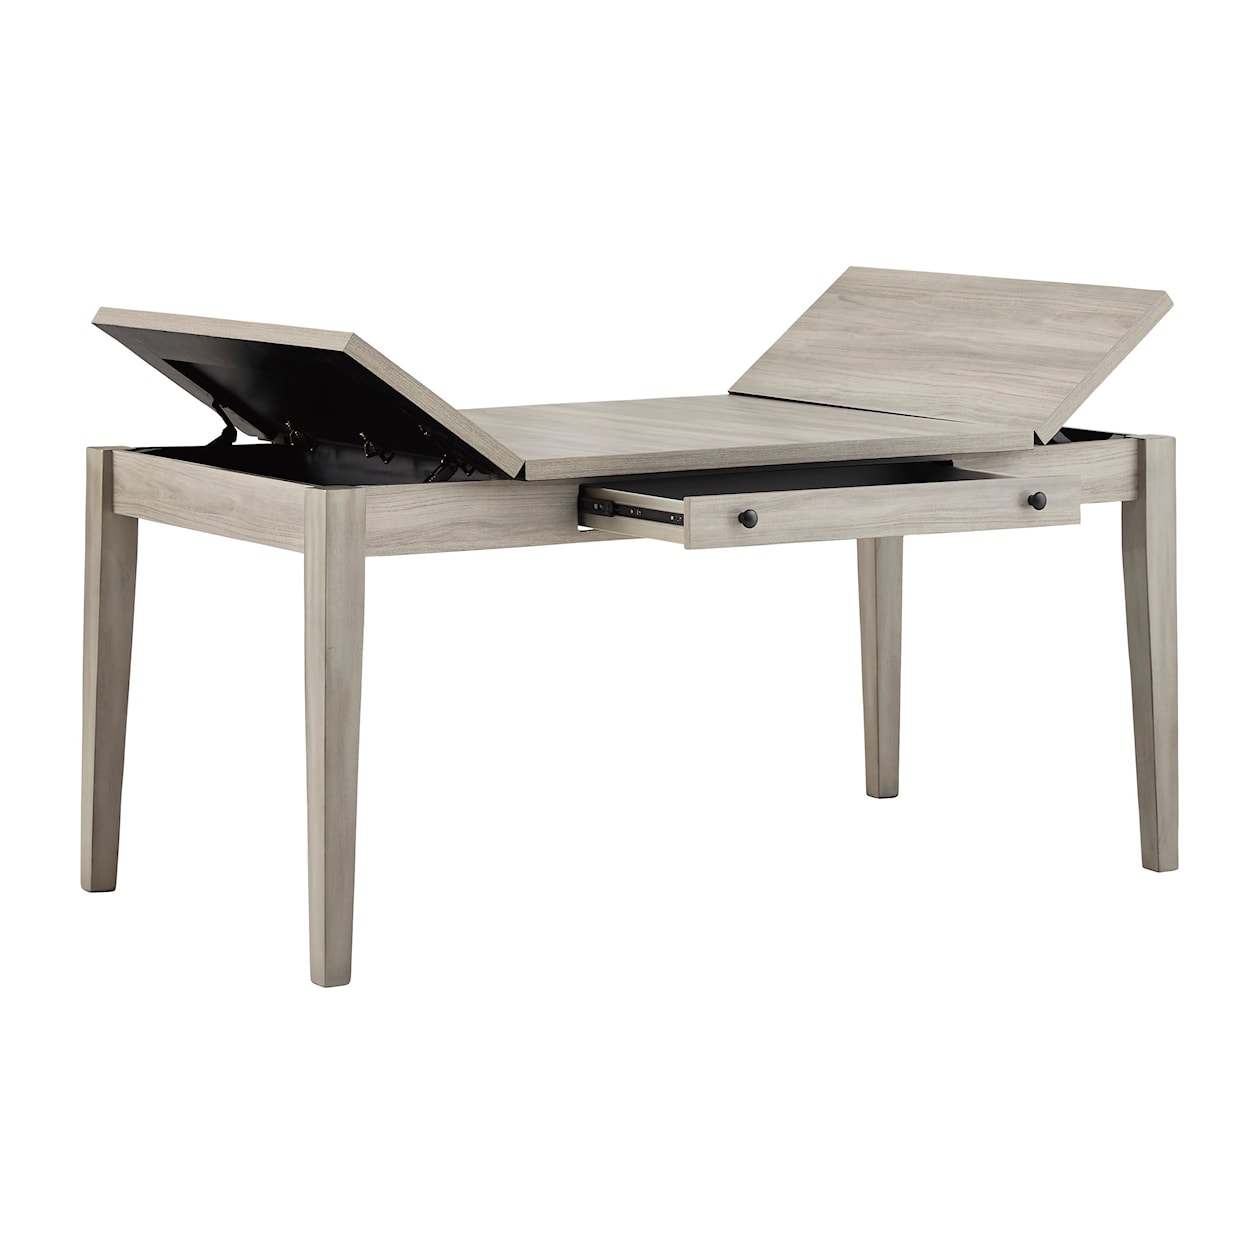 Ashley Furniture Signature Design Parellen 7-Piece Table and Chair Set